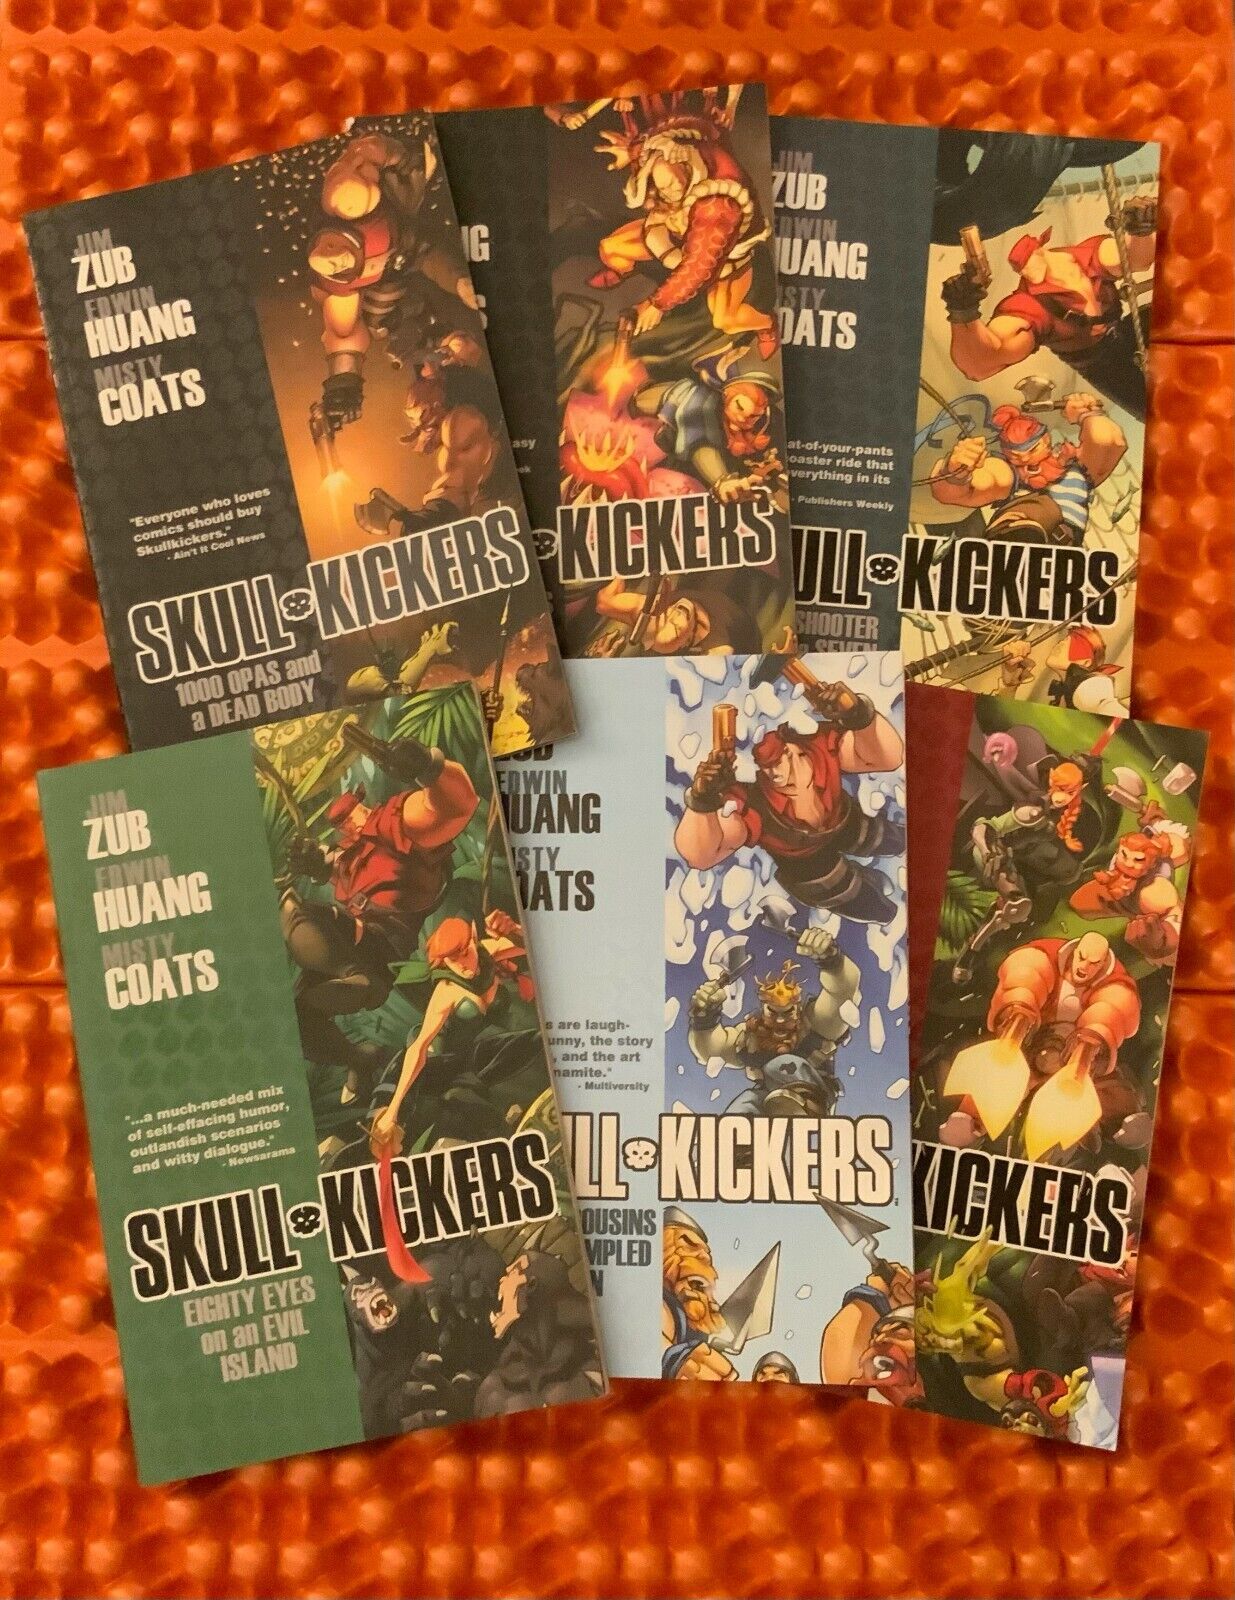 Image Comics Skull Kickers Vol 1-6 Zub, Huang, Coats - 1st Prints *Some Signed*